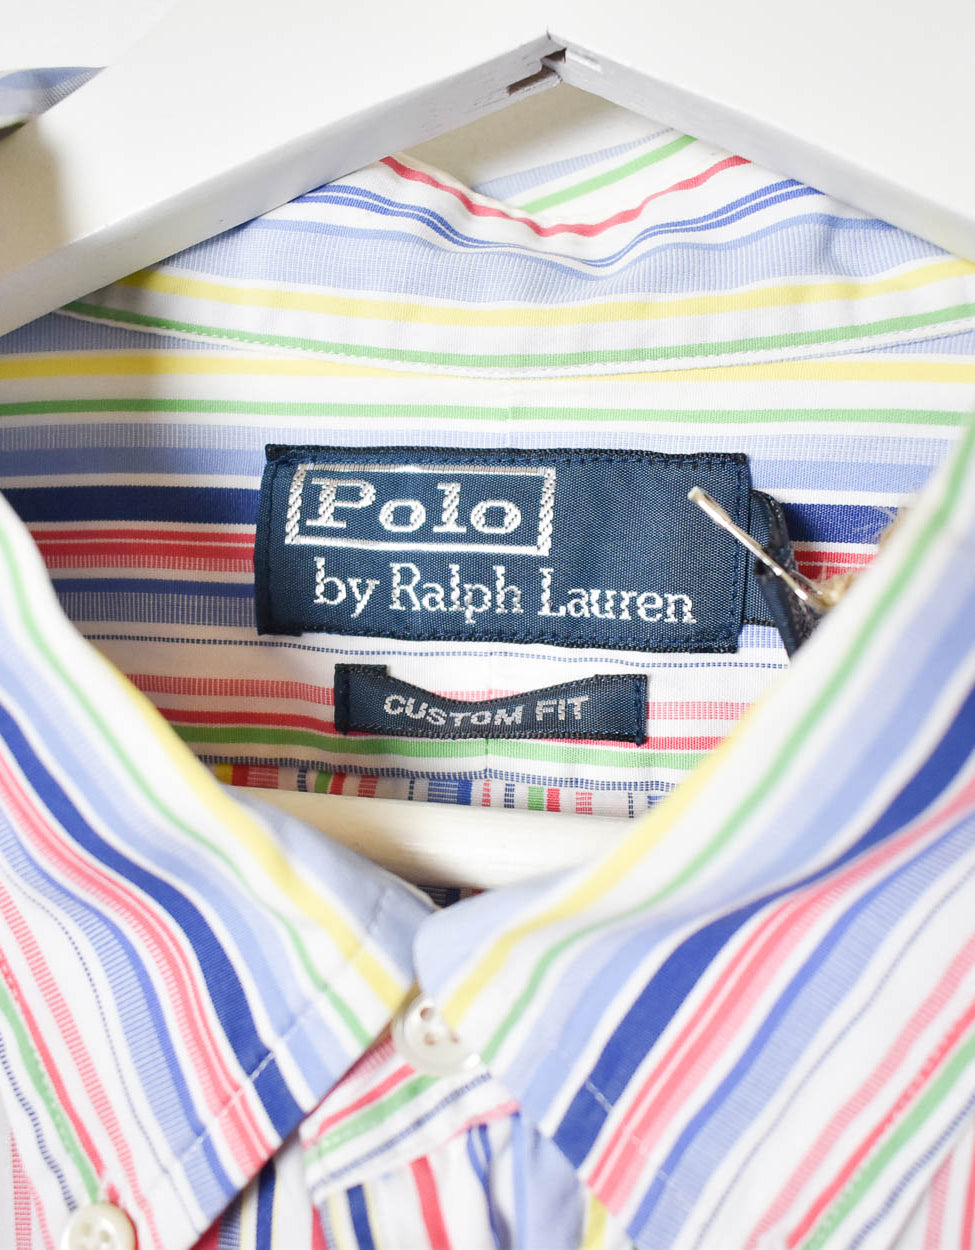 Multi Polo Ralph Lauren Striped Shirt - XX-Large